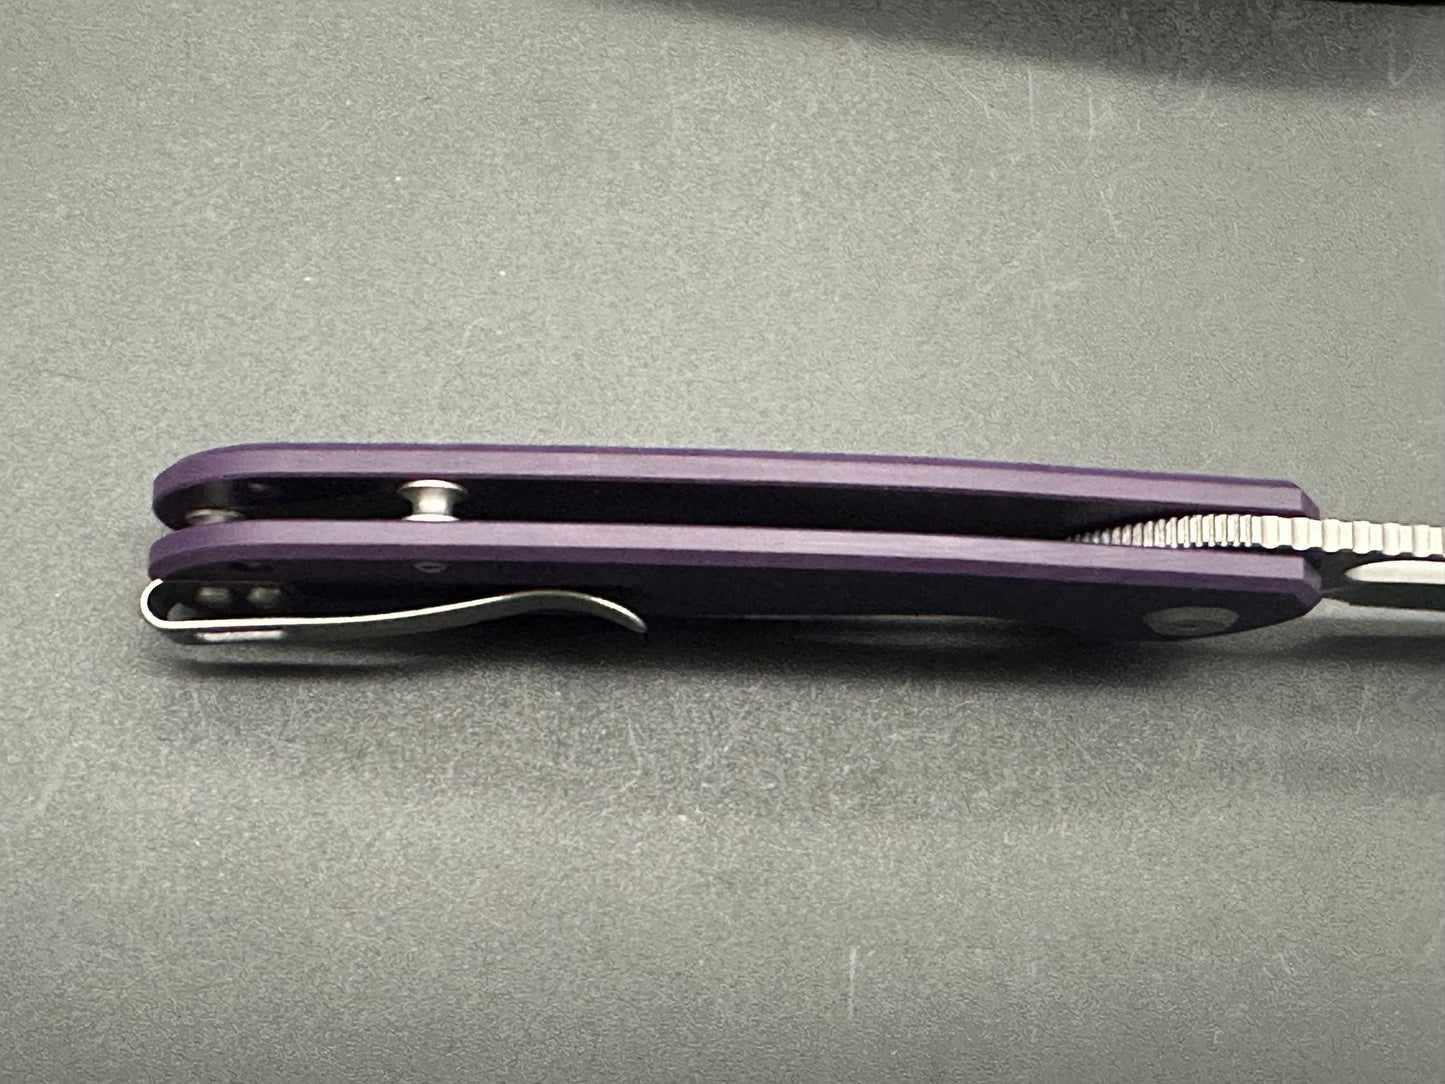 Eutektik Trinity Purple G10 - New in box from Eutektik knives plus LTK Koozie/Patch & Sticker w/each knife